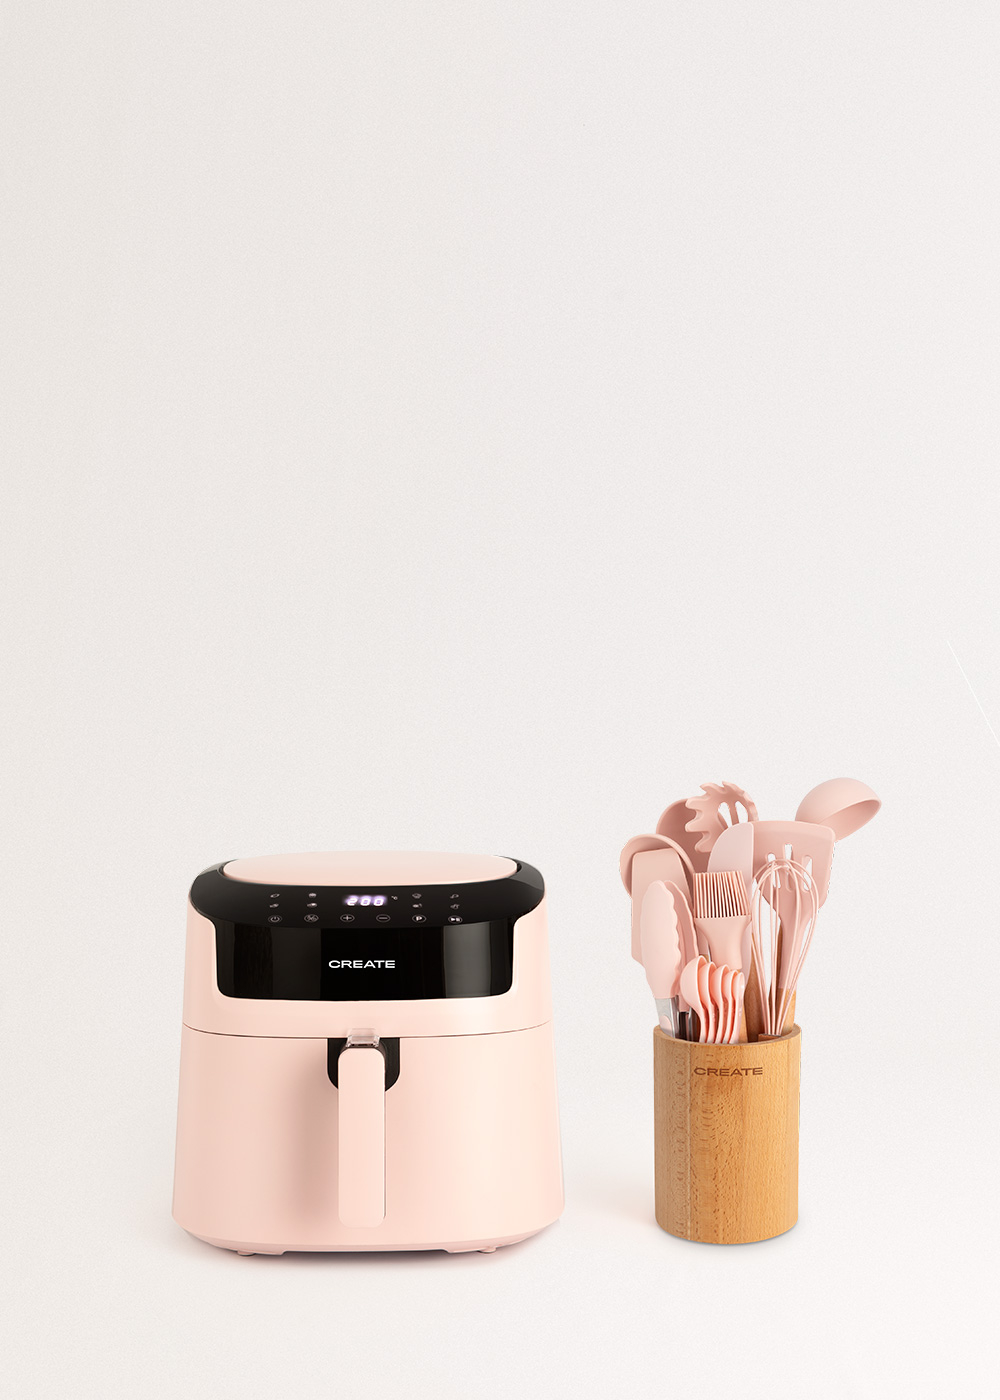 Electrodomésticos rosa pastel - Create